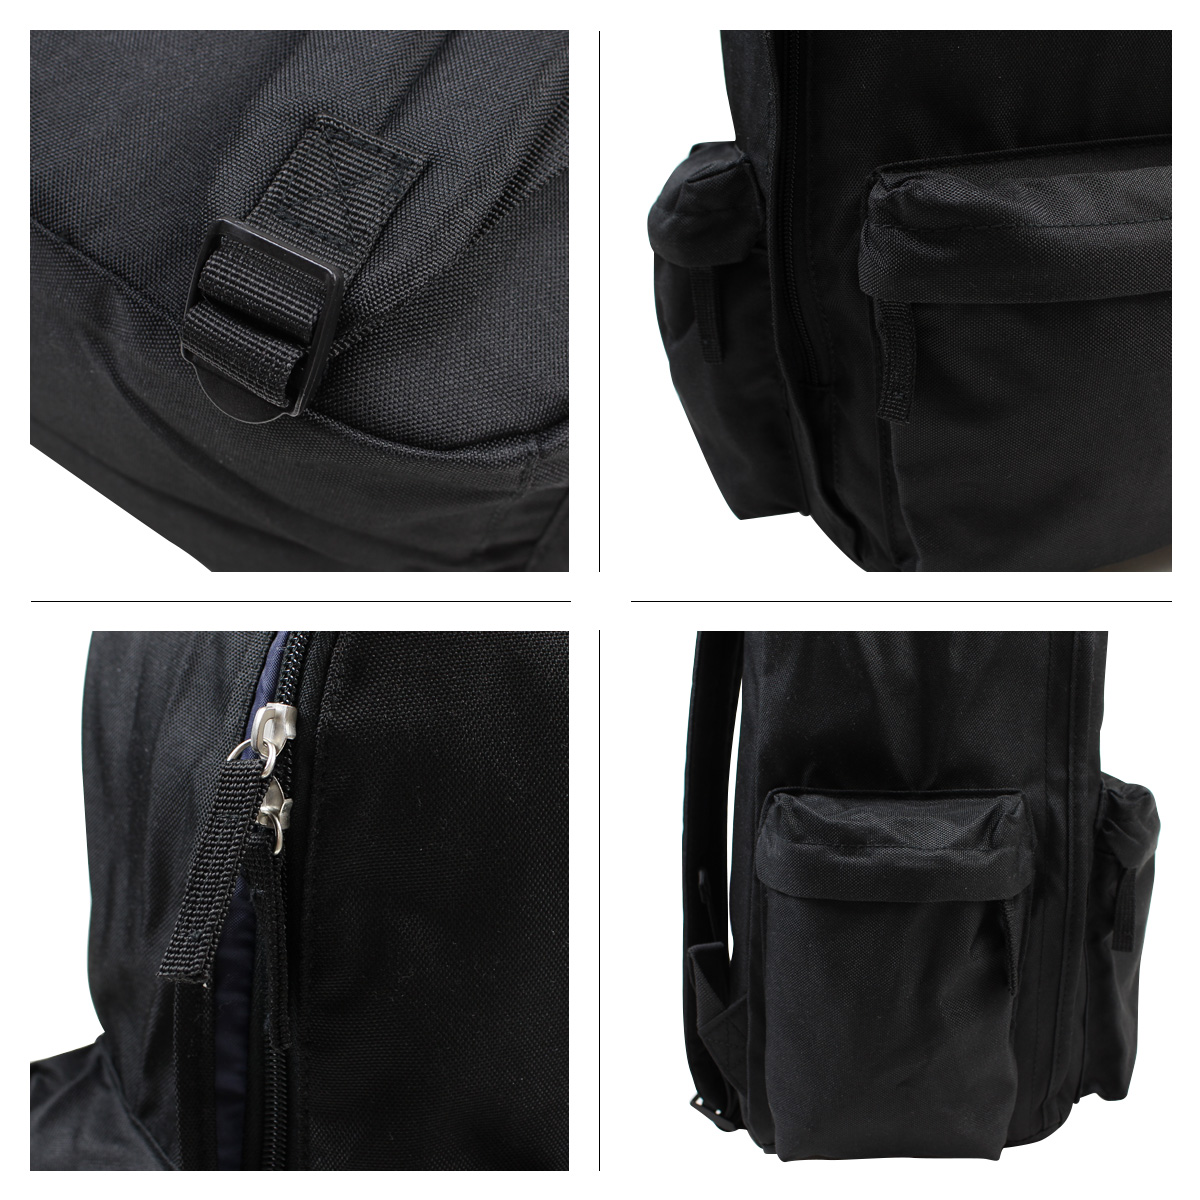 ALLSPORTS: POLO RALPH LAUREN Polo Ralph Lauren bag rucksack backpack ...